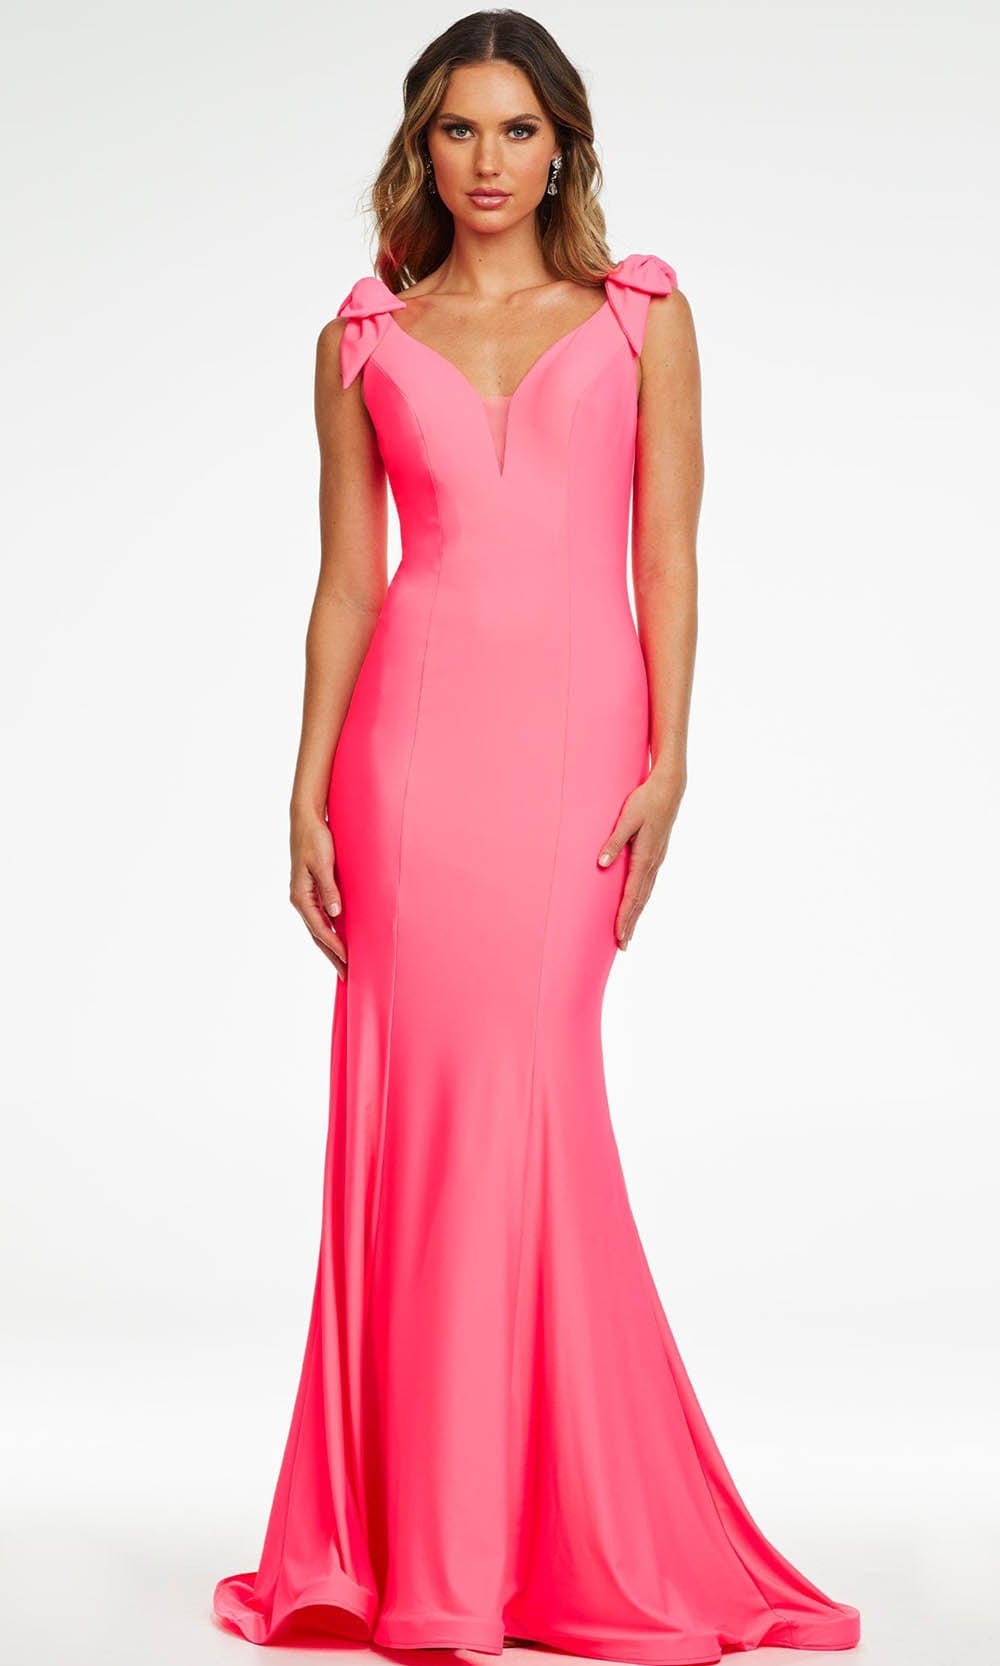 Ashley Lauren - 11183 Bead-Draped Back Gown Prom Dresses 0 / Hot Pink